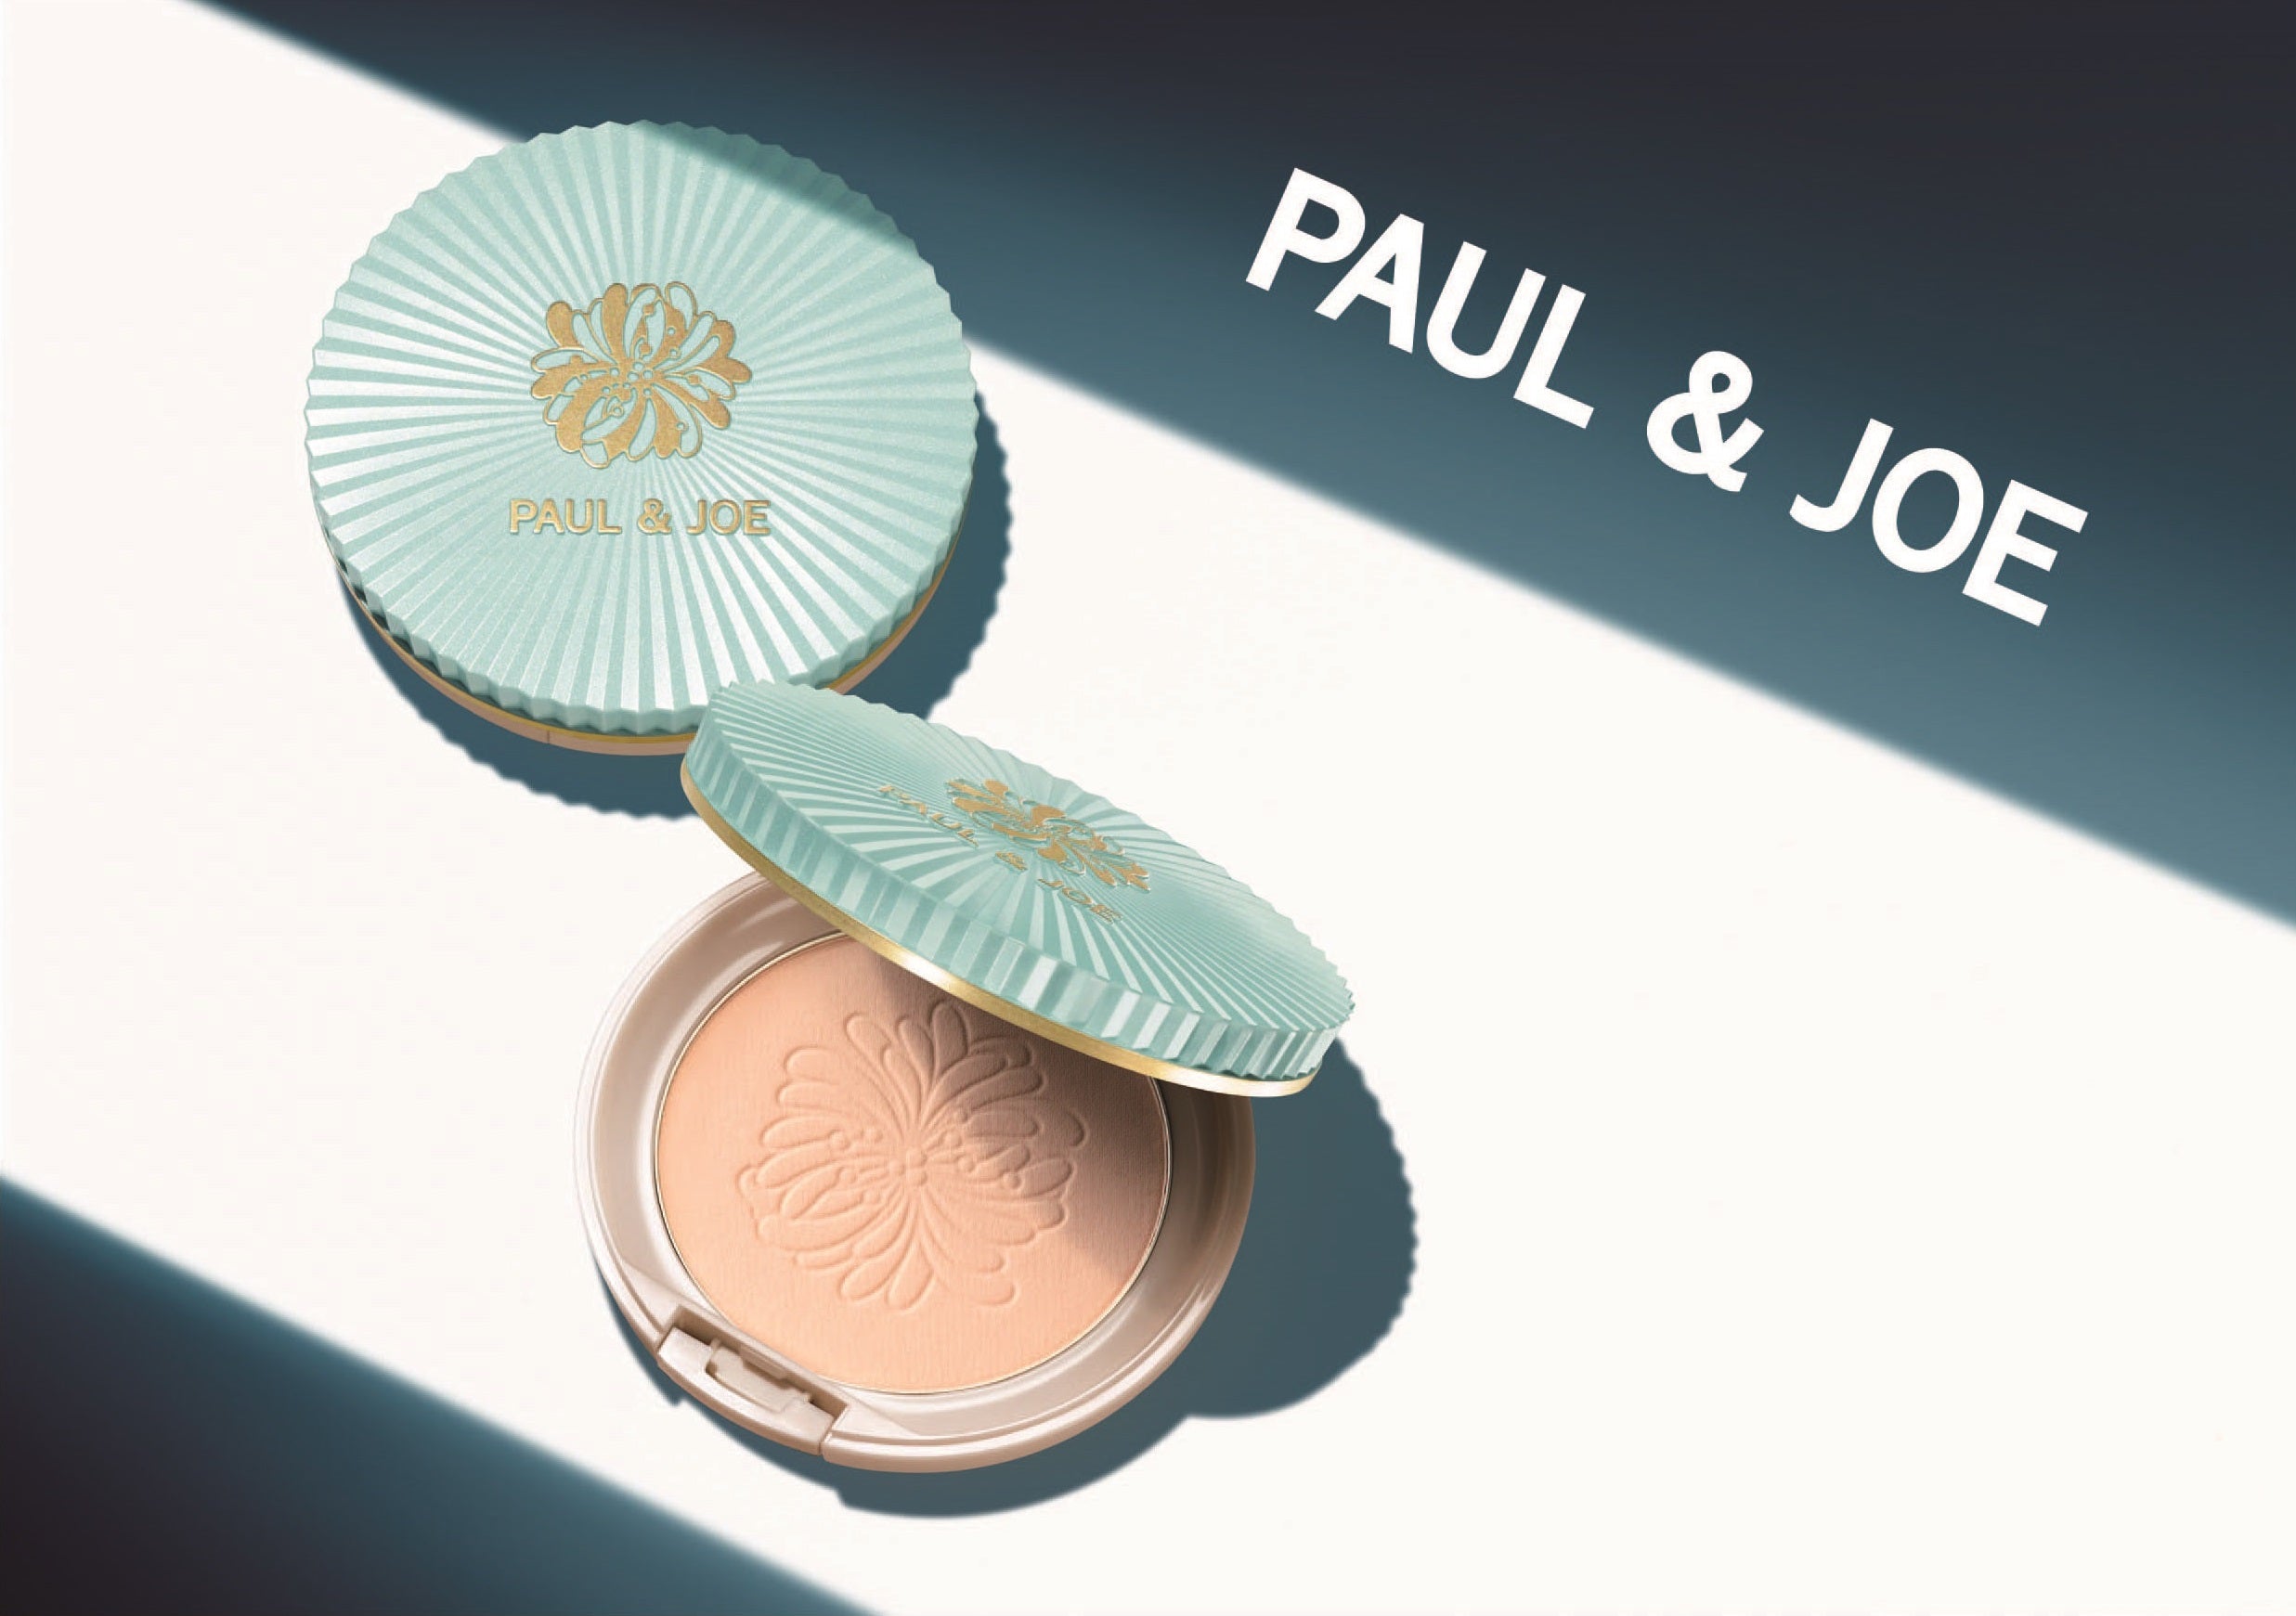 PAUL & JOE（ポールアンドジョー） – Perfumerie Sukiya Online Store